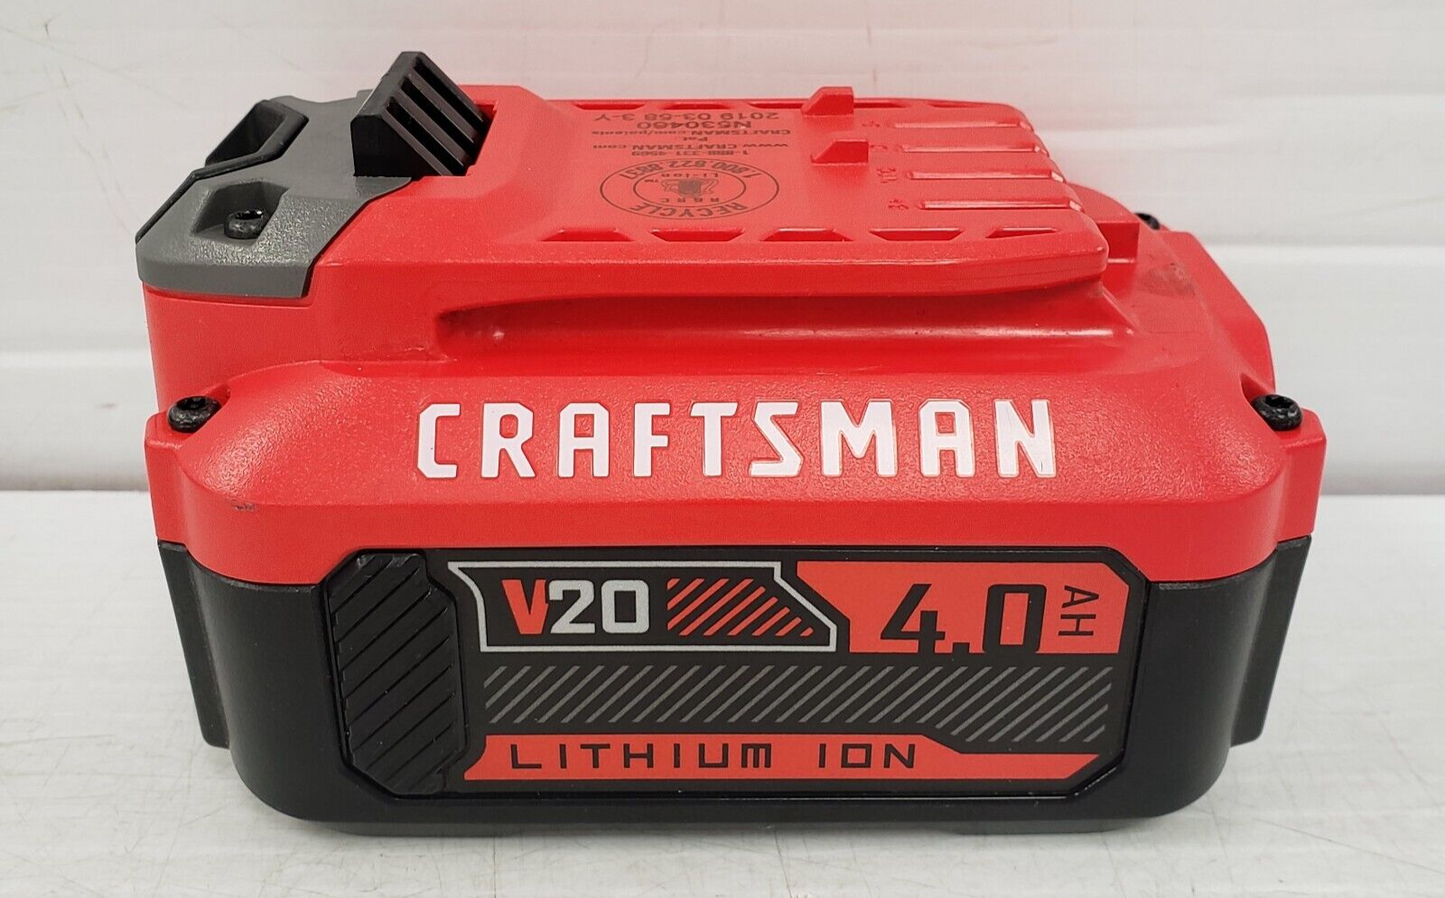 (I-34657) Craftsman CMCBL720 Leaf Blower